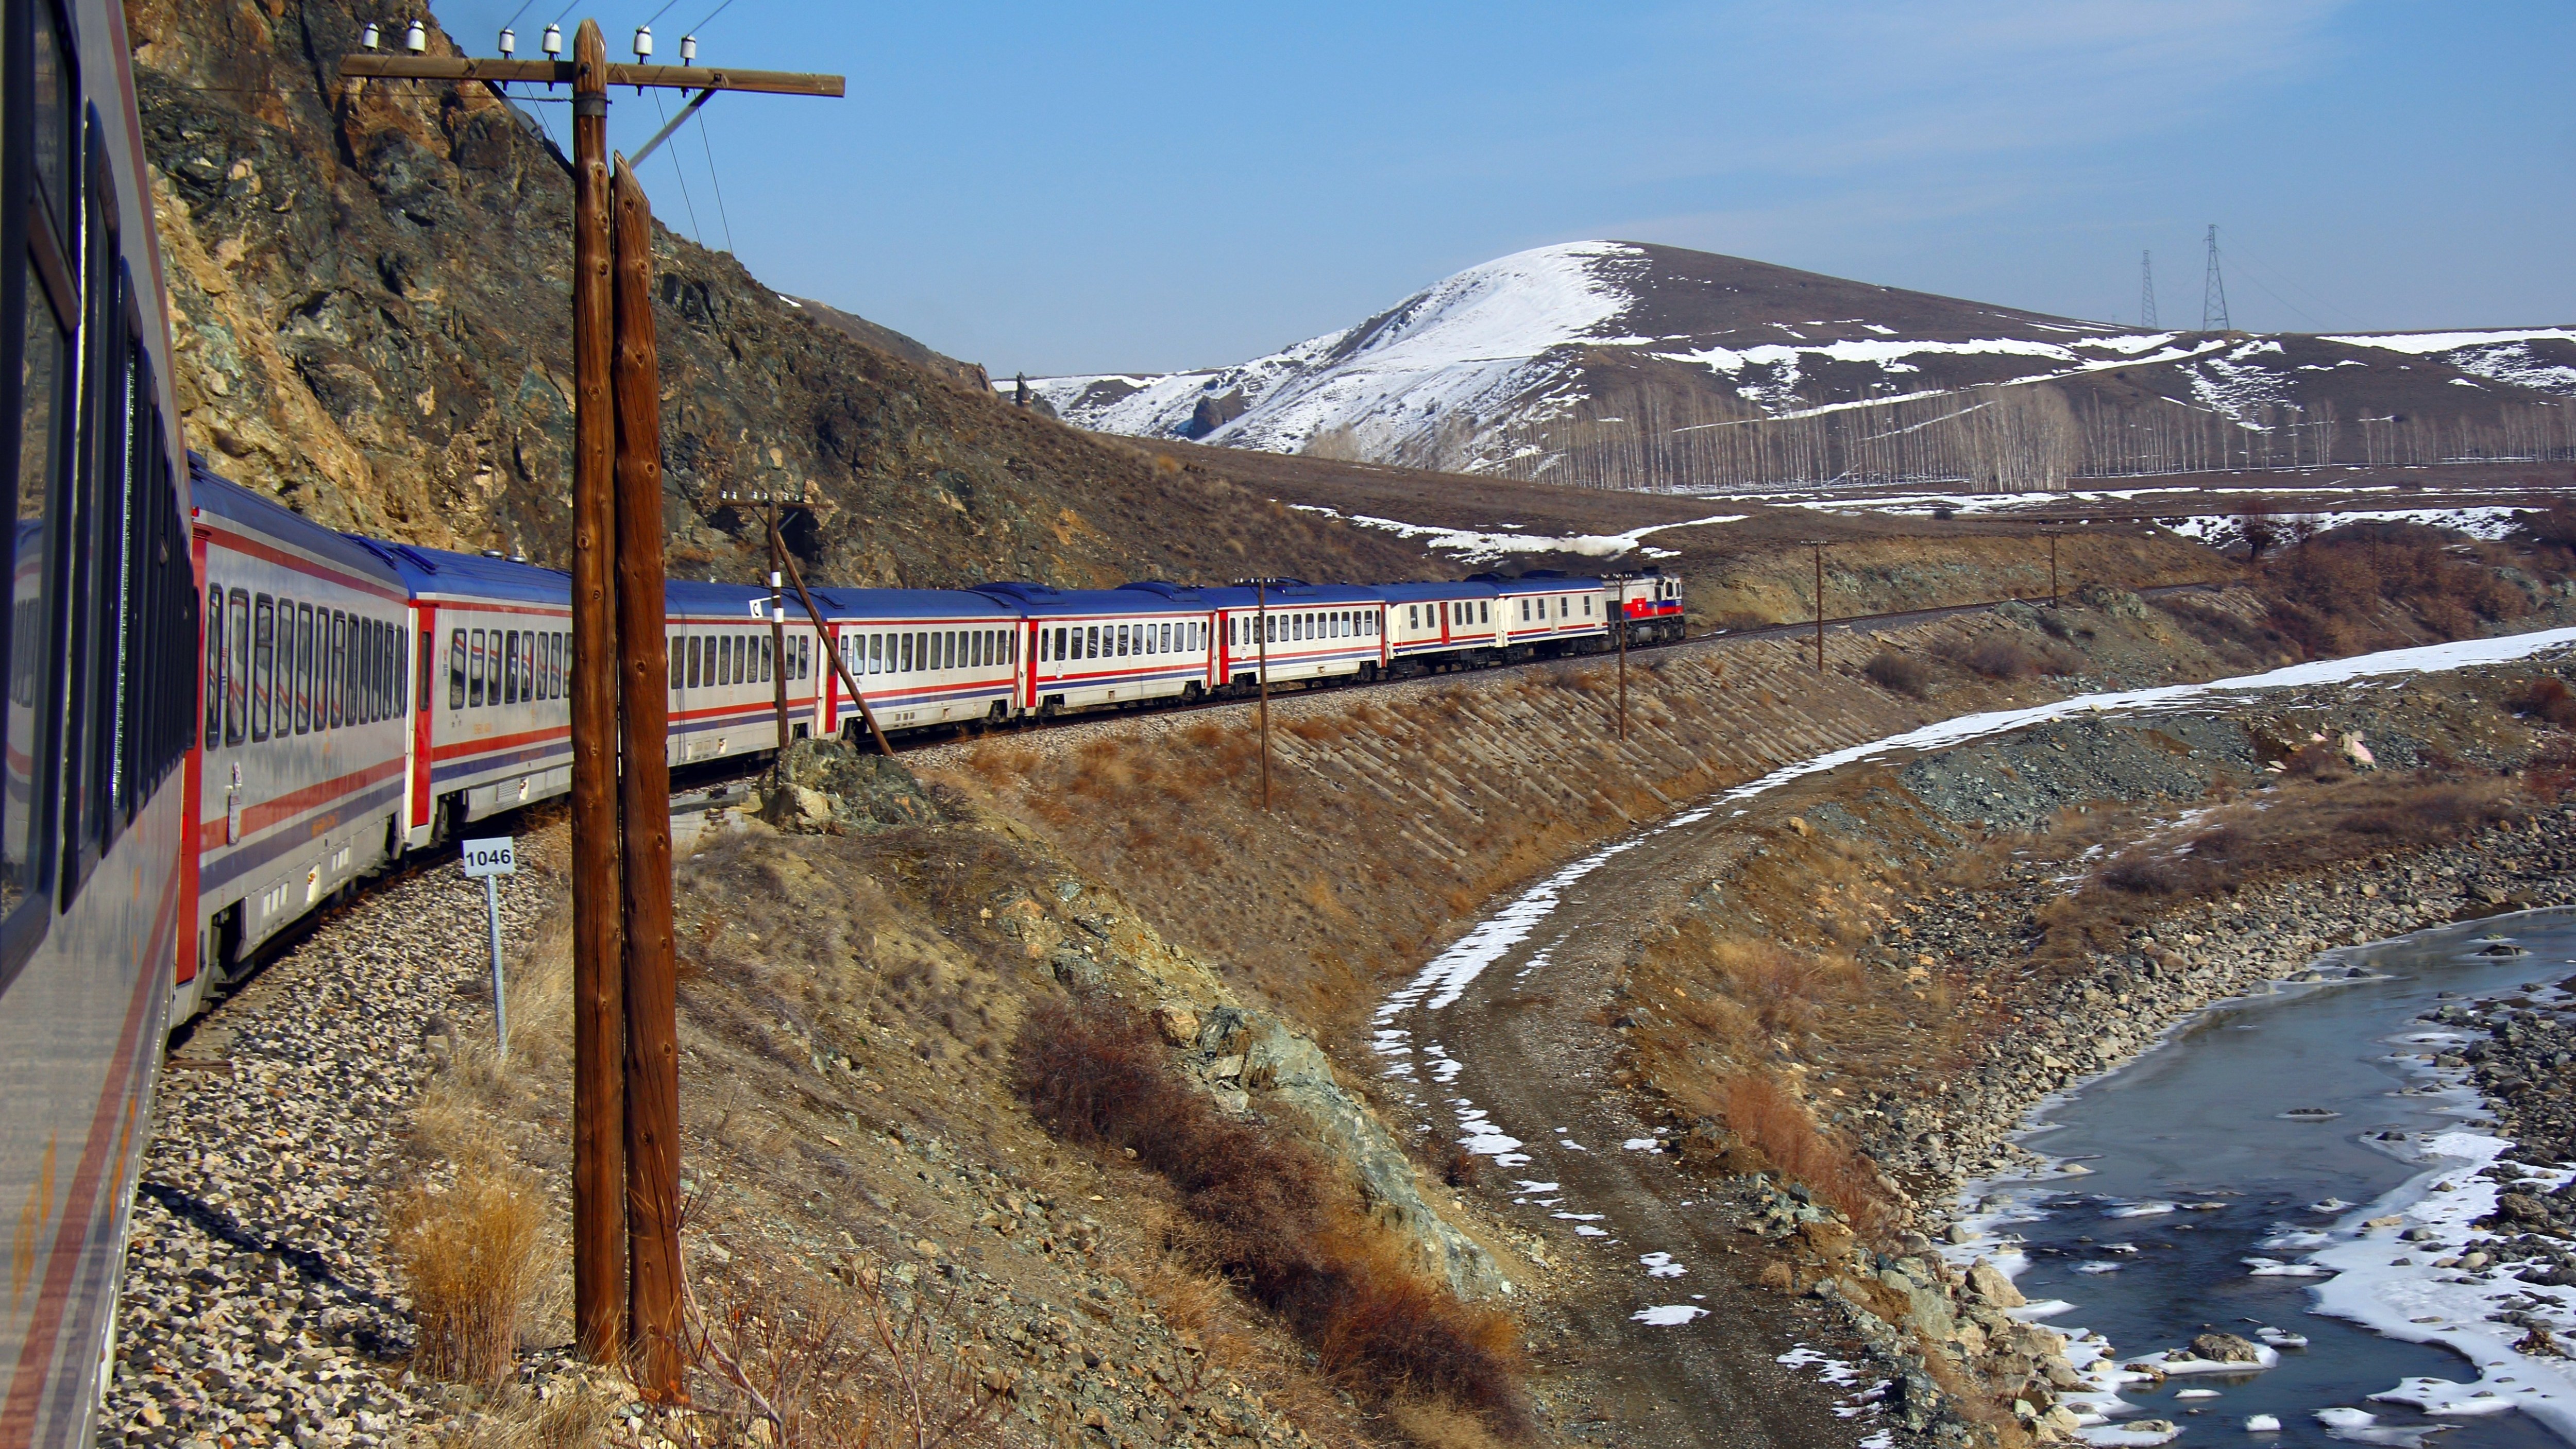 The Eastern Express between travels between Ankara and Kars